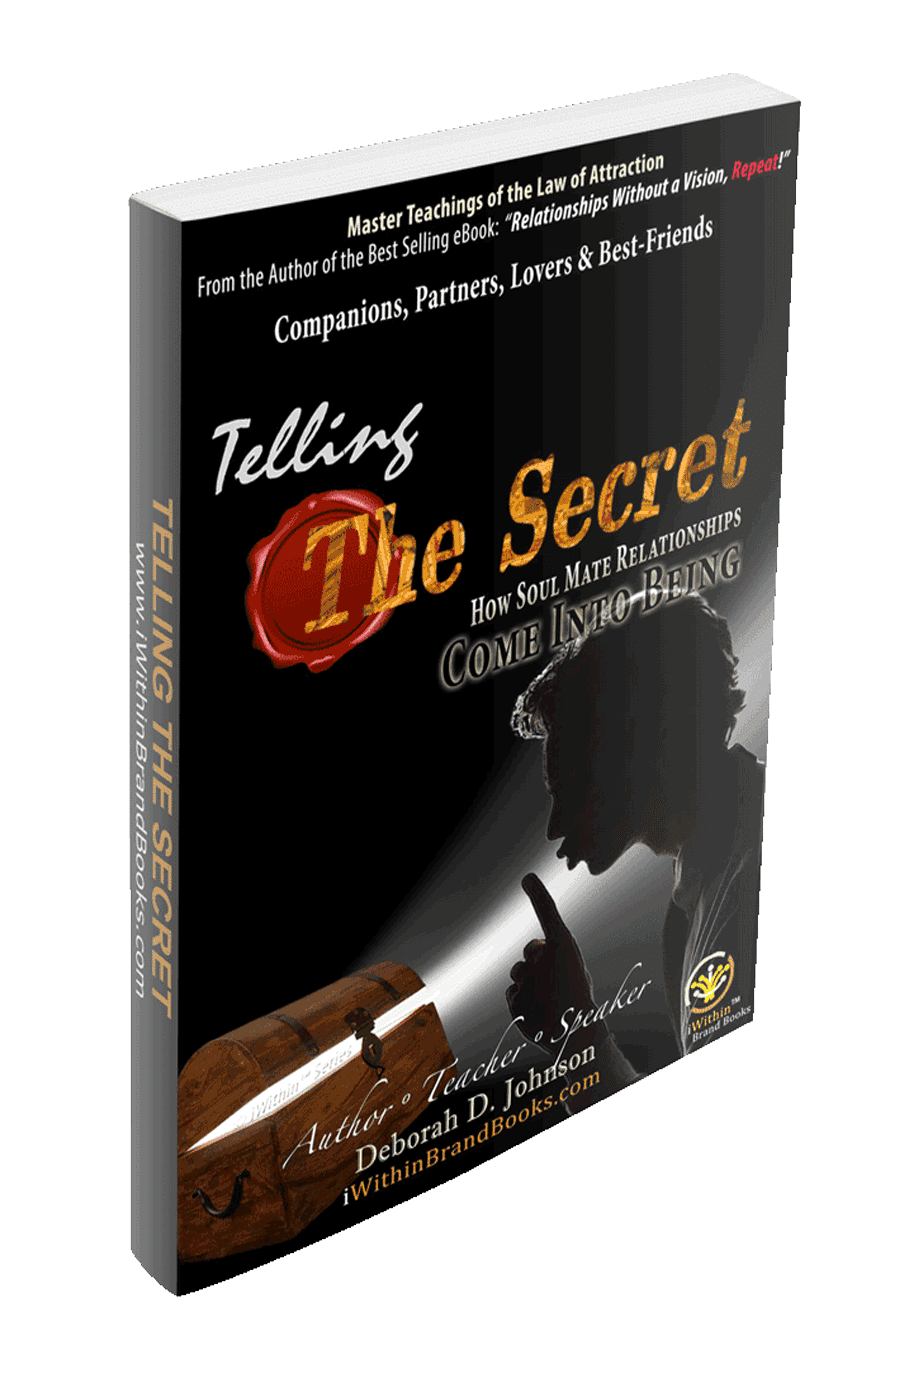 //iwithinbrandbooks.com/wp-content/uploads/2019/08/TELLING-THE-SECRET-923x1381actual.png